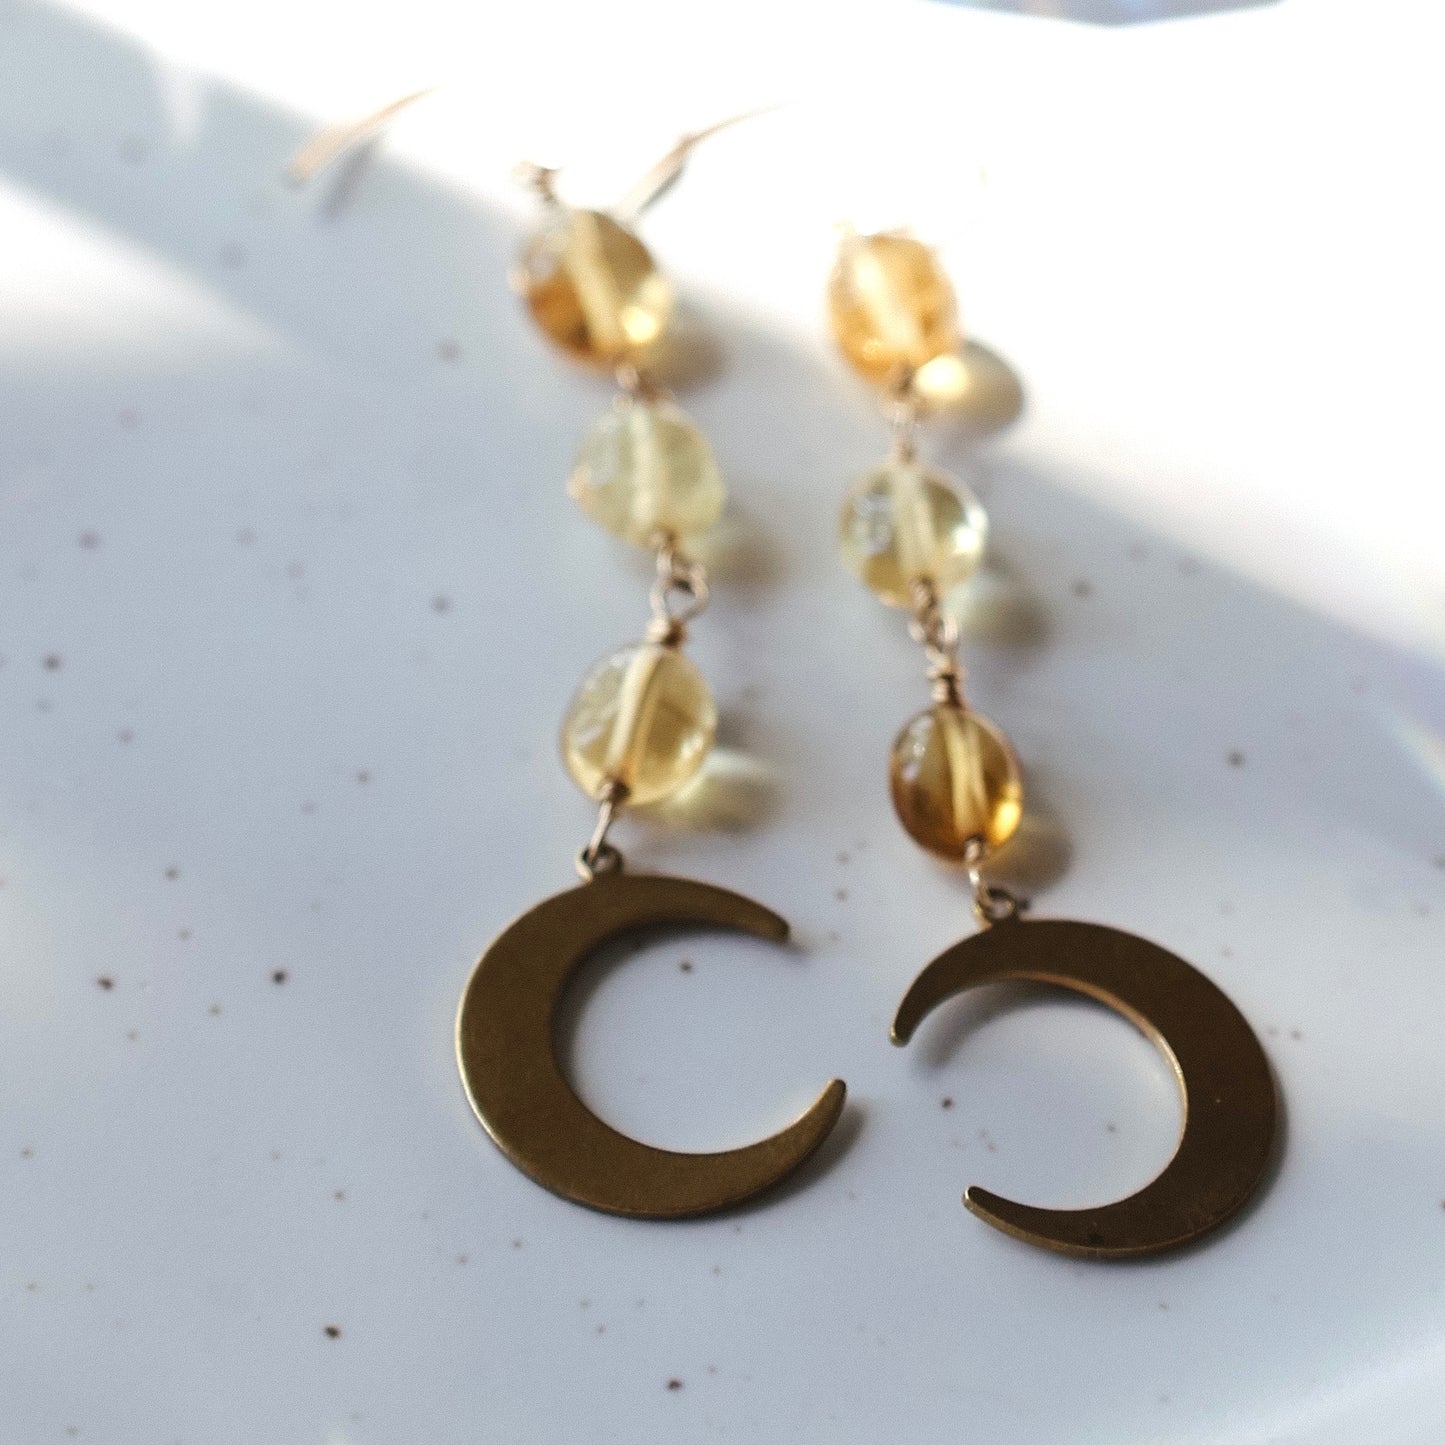 Lunar Brass Earrings with Citrine